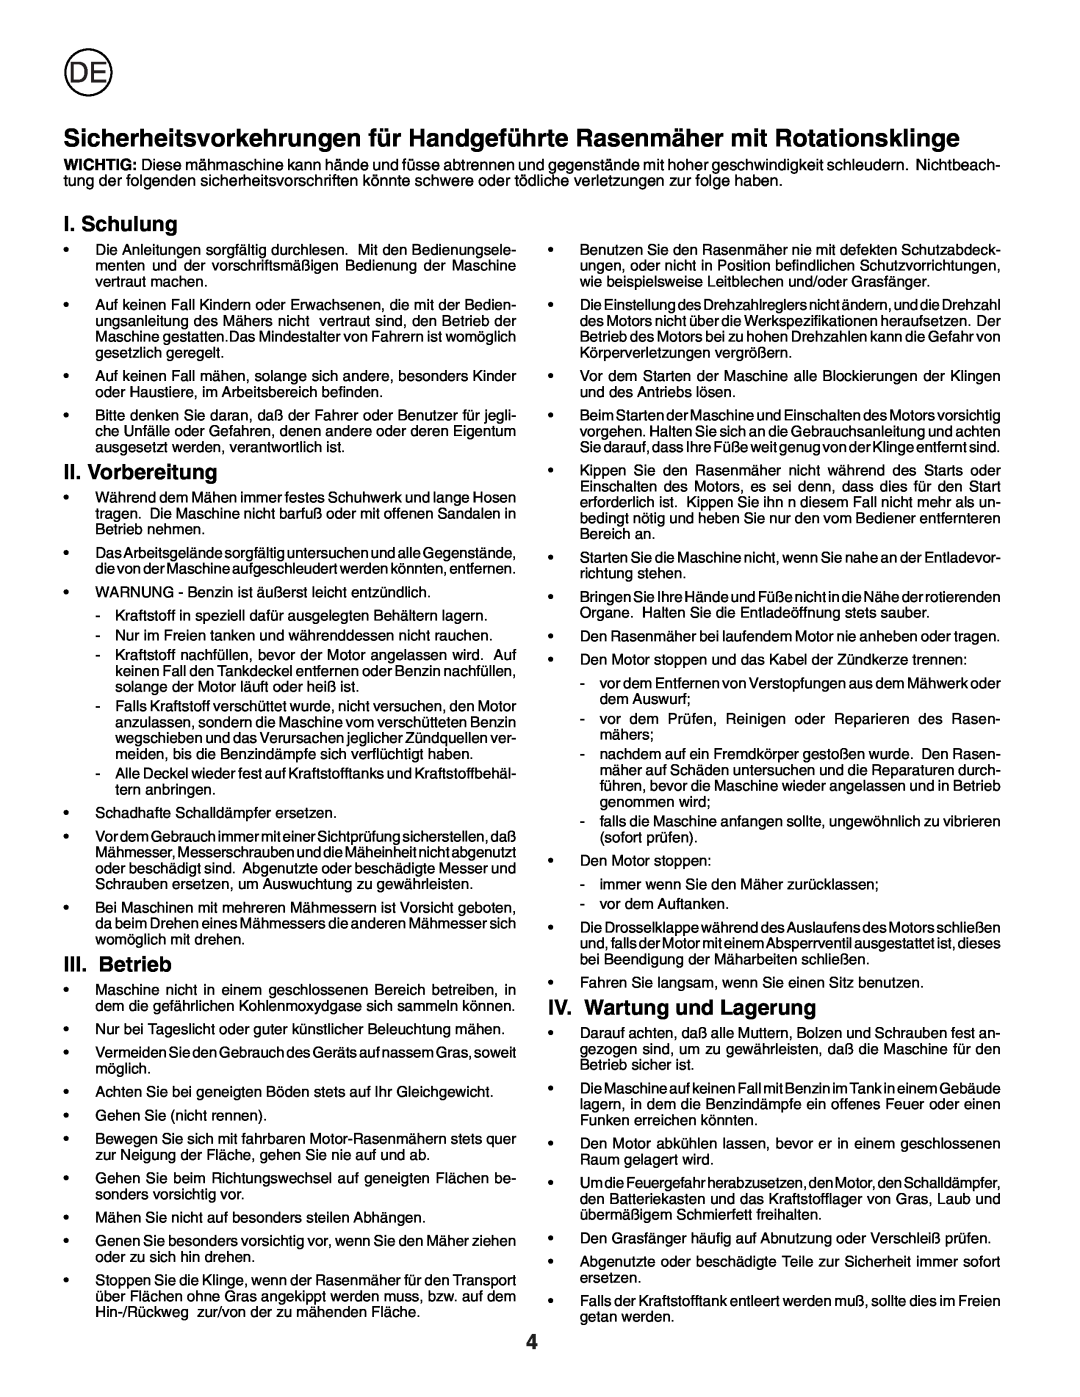 Husqvarna R152SVBBC instruction manual I. Schulung, II. Vorbereitung, III. Betrieb, IV. Wartung und Lagerung 